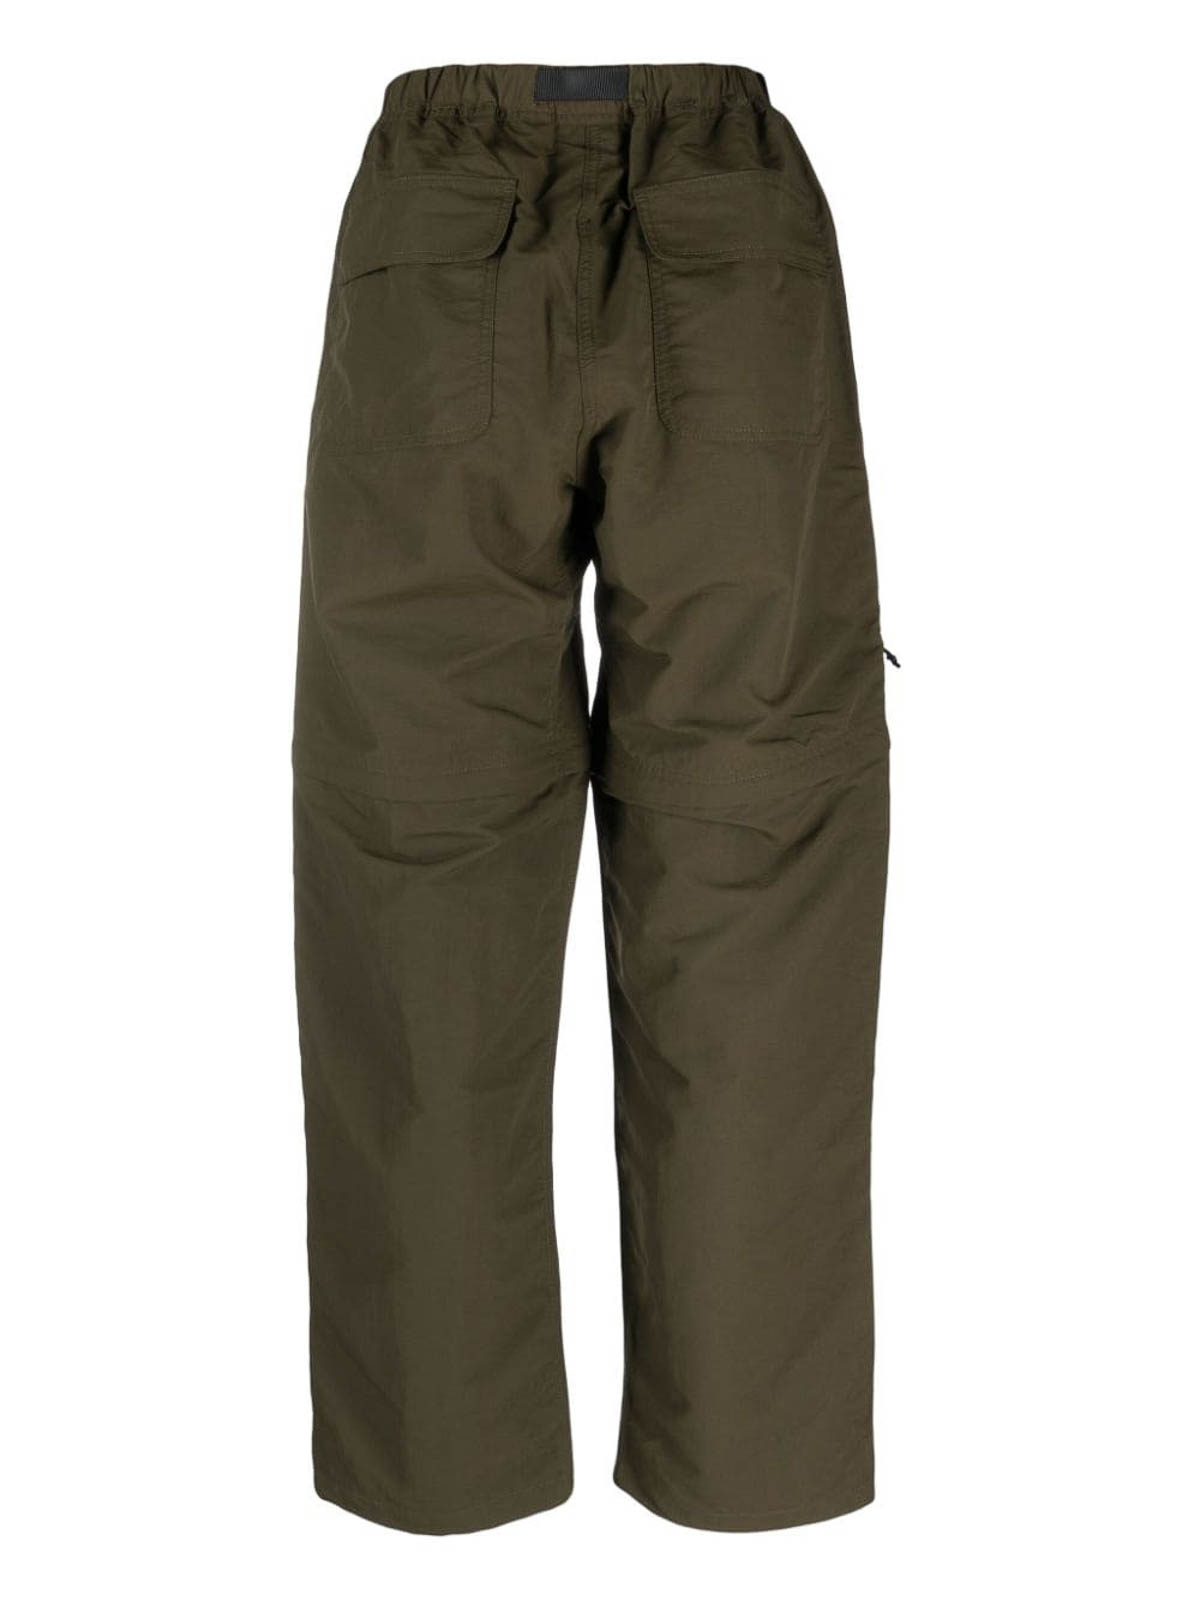 Pika Outdoor Womens Ortler Convertible Trousers (Beige) | Sportpursuit